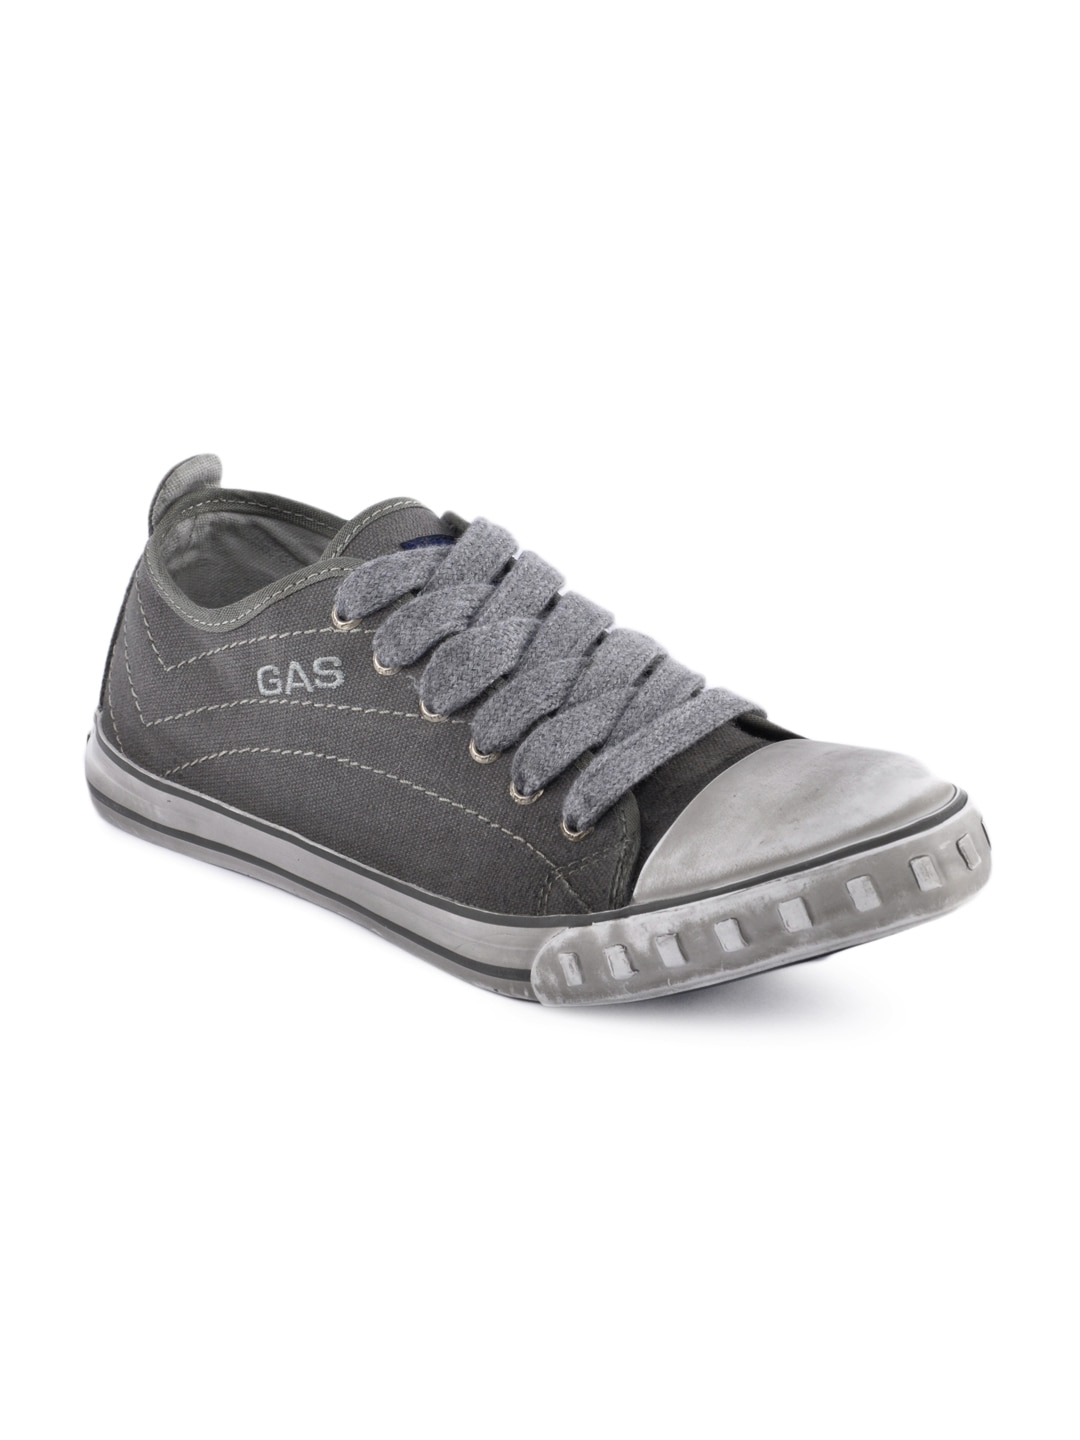 Gas Men Passtime Grey Casual Shoes